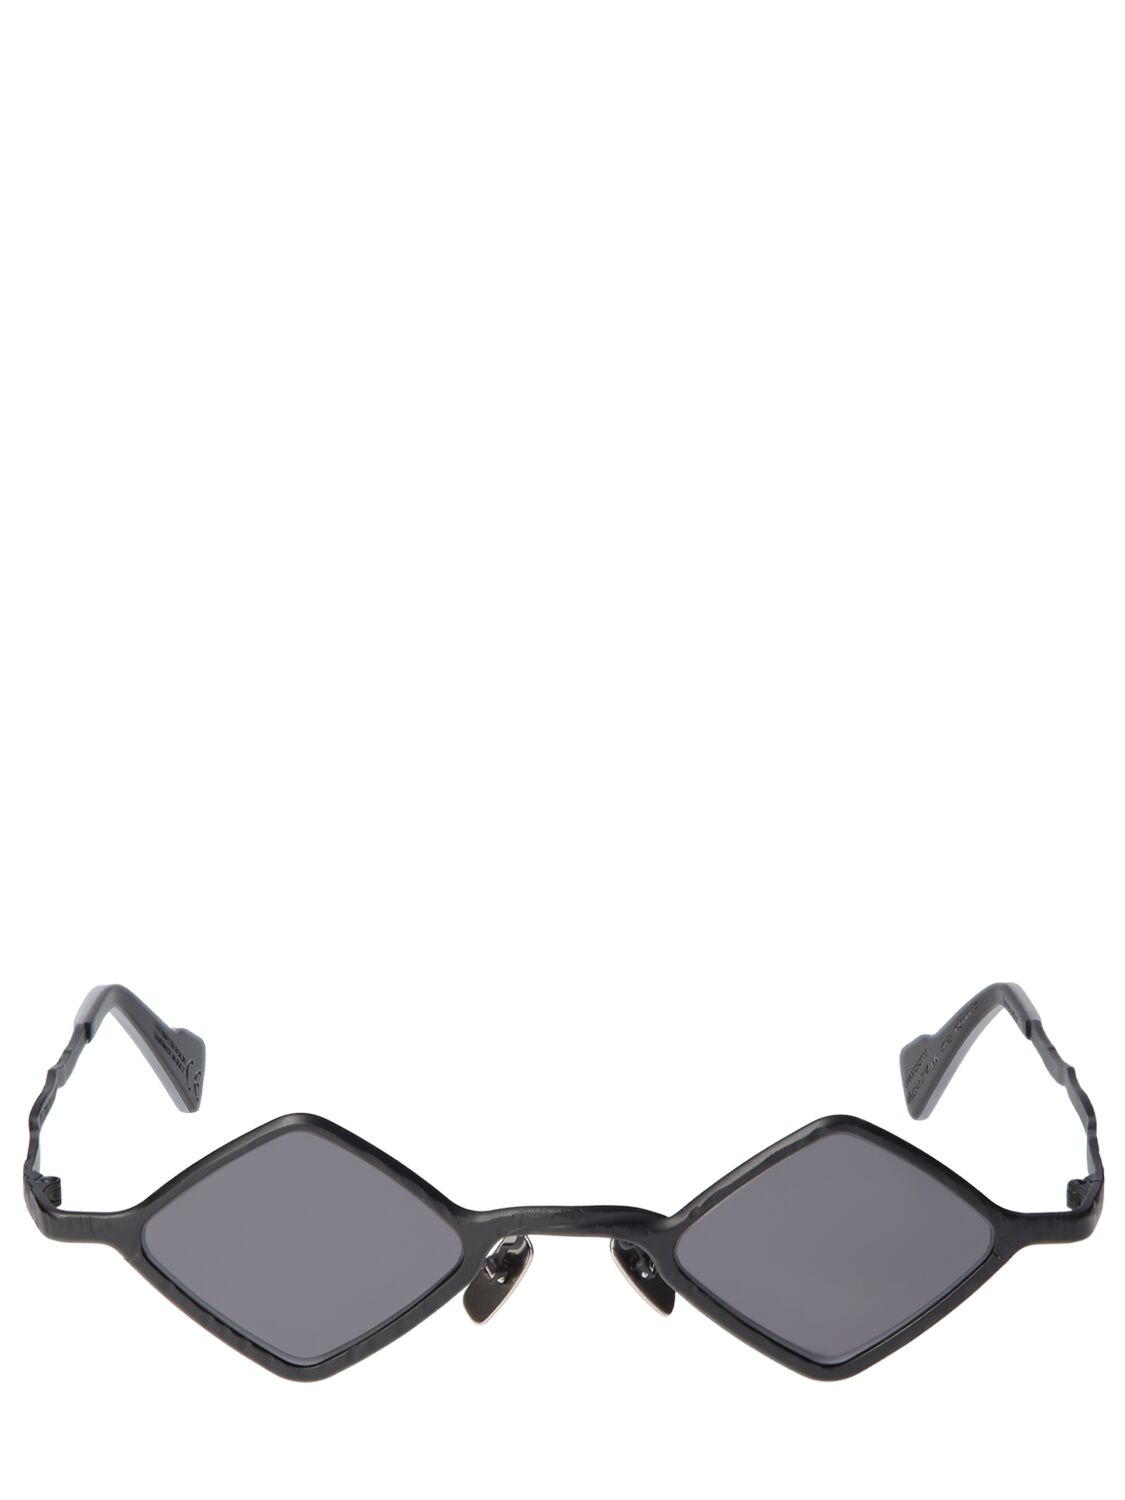 Kuboraum Berlin Z14 Squared Metal Sunglasses In Black,grey